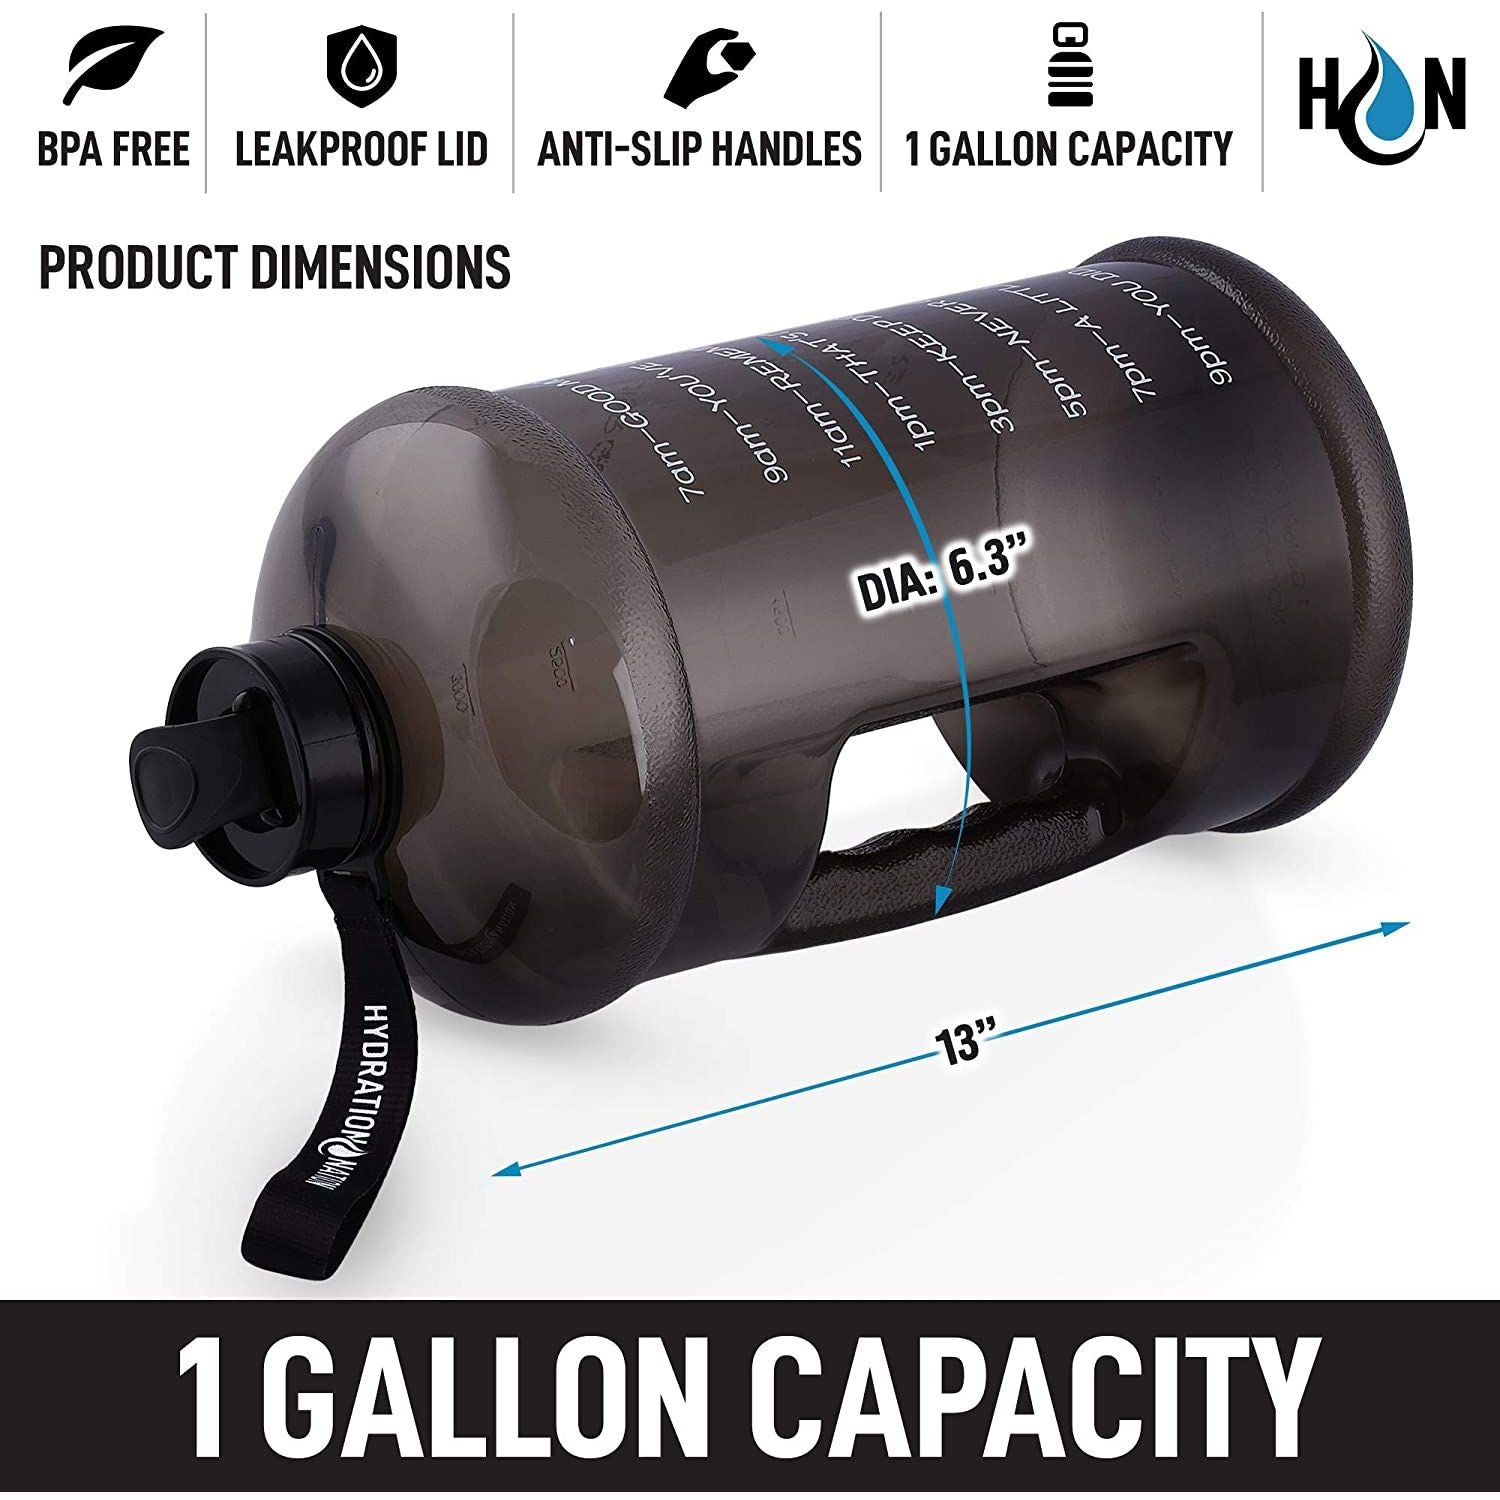 1 gallon water capacity